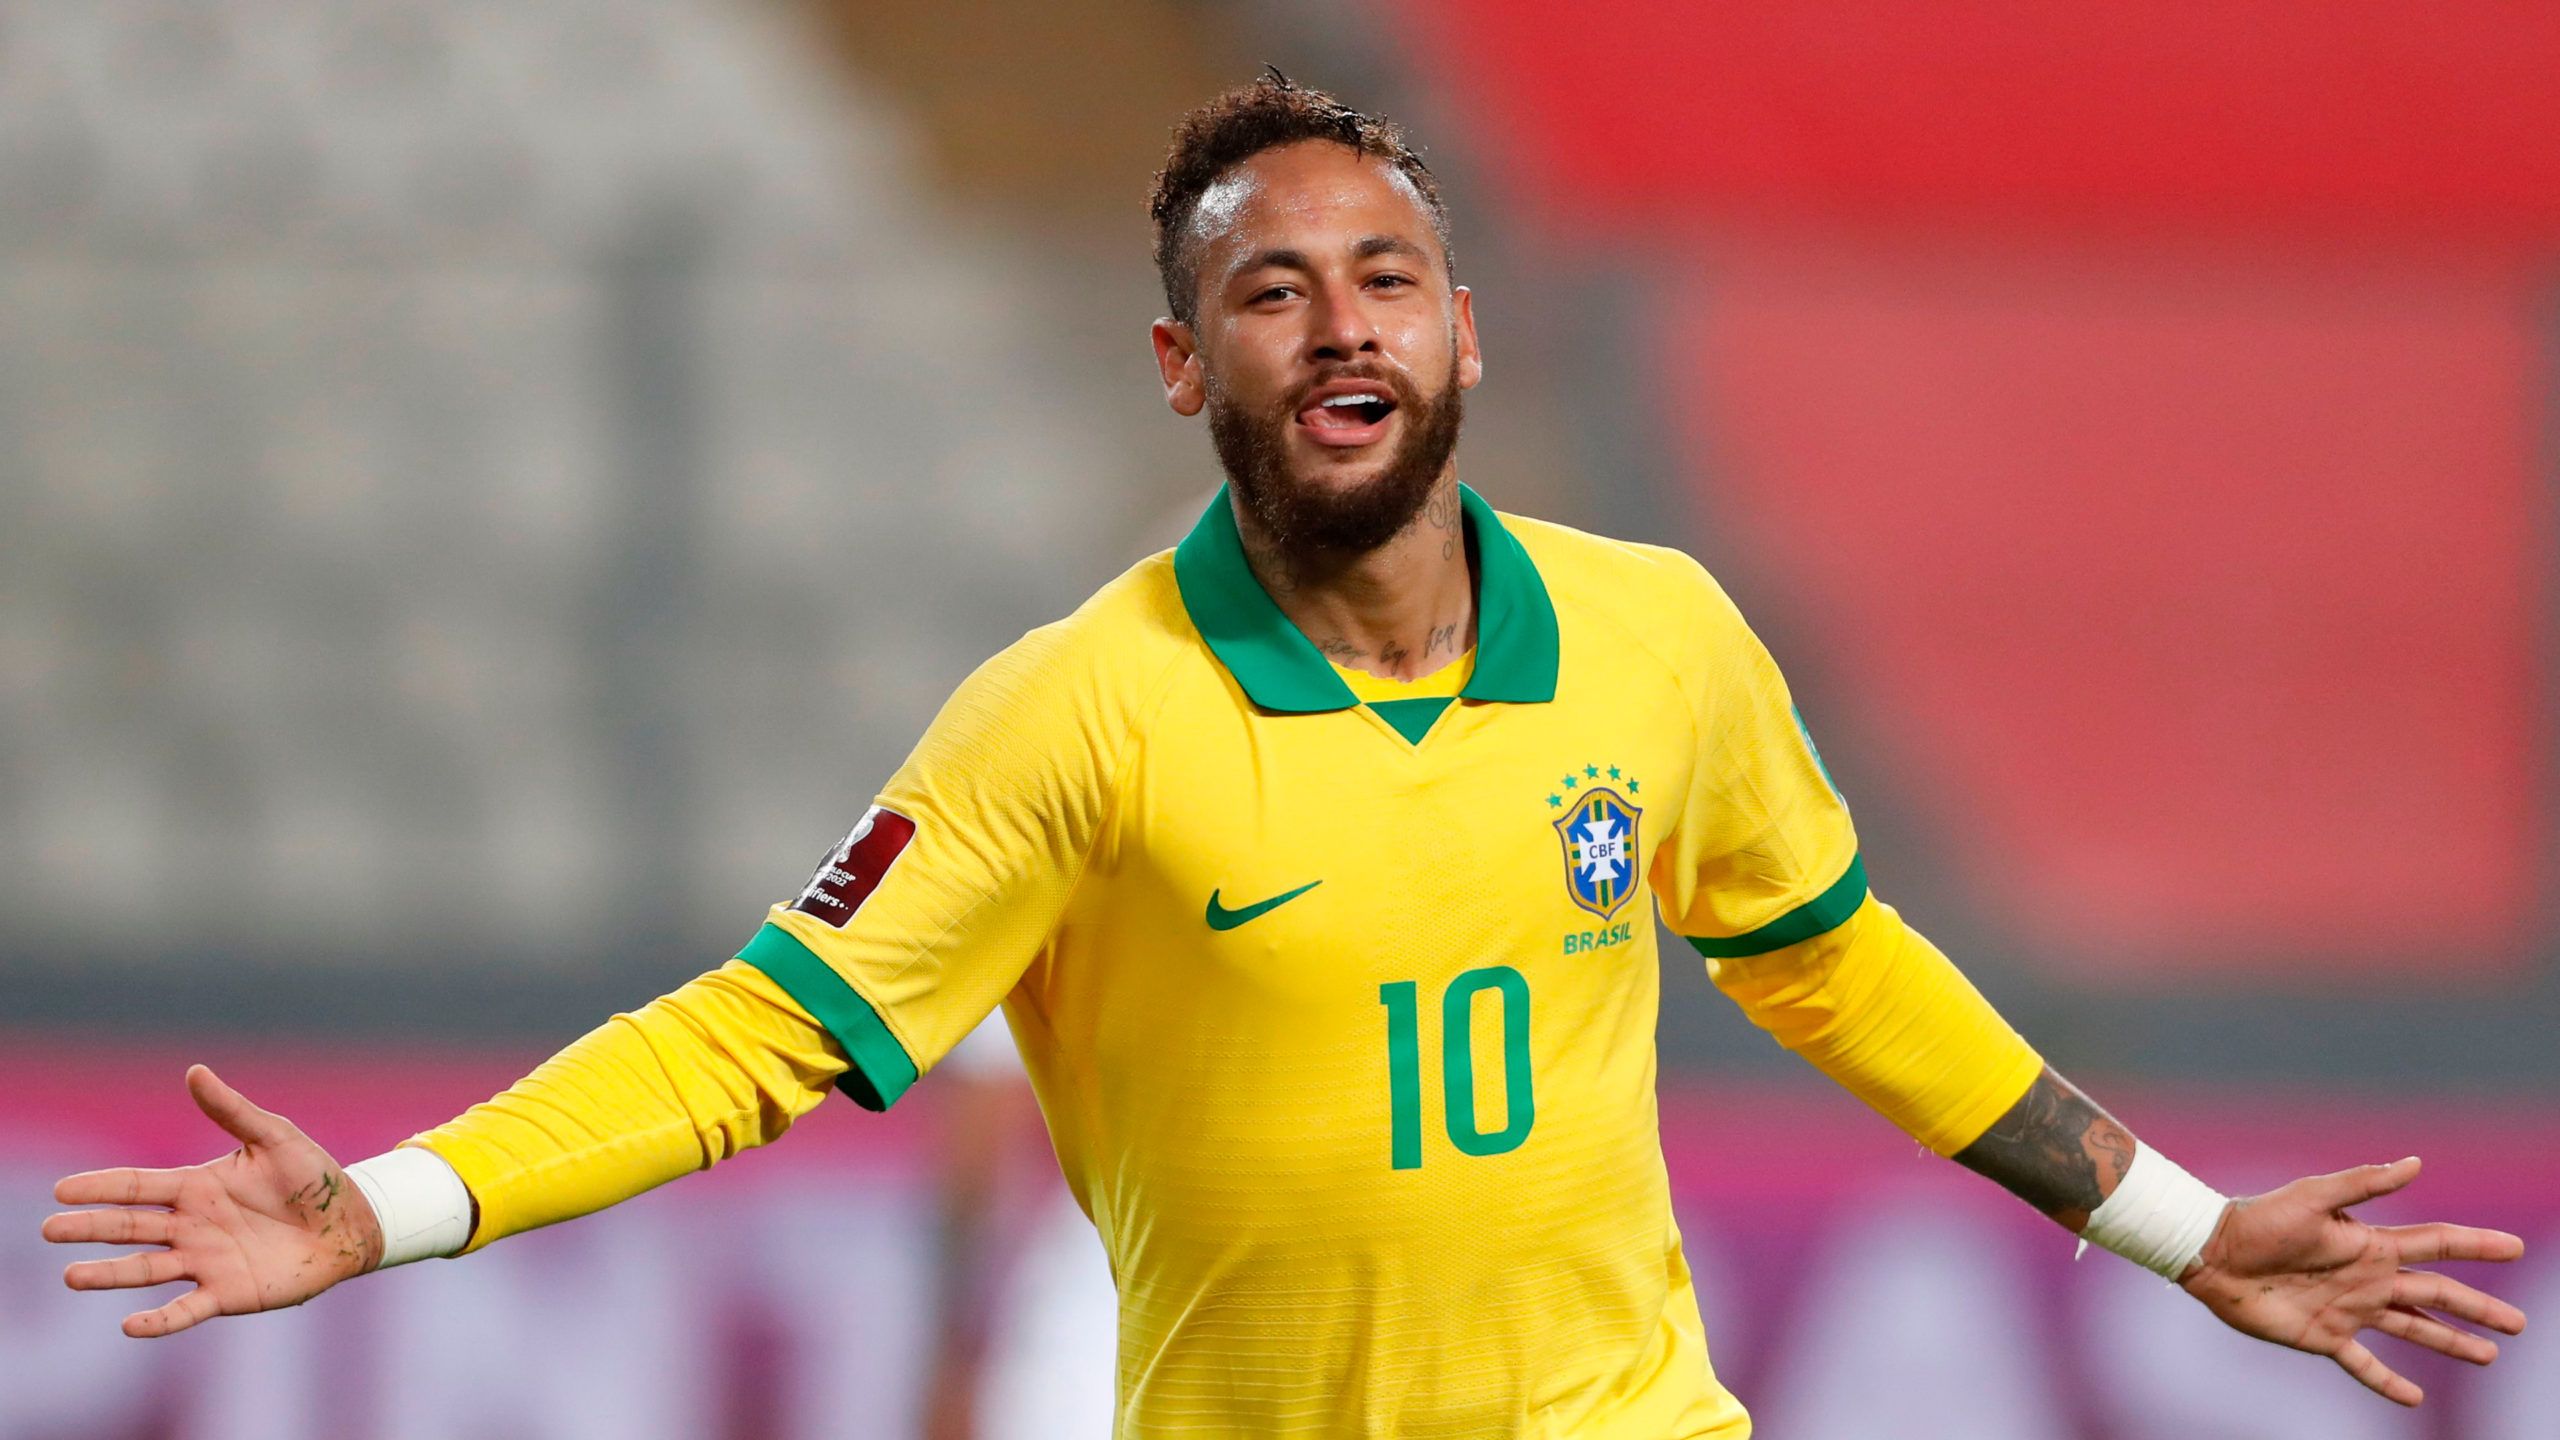 Copa America 2021: Neymar named captain to lead Brazil